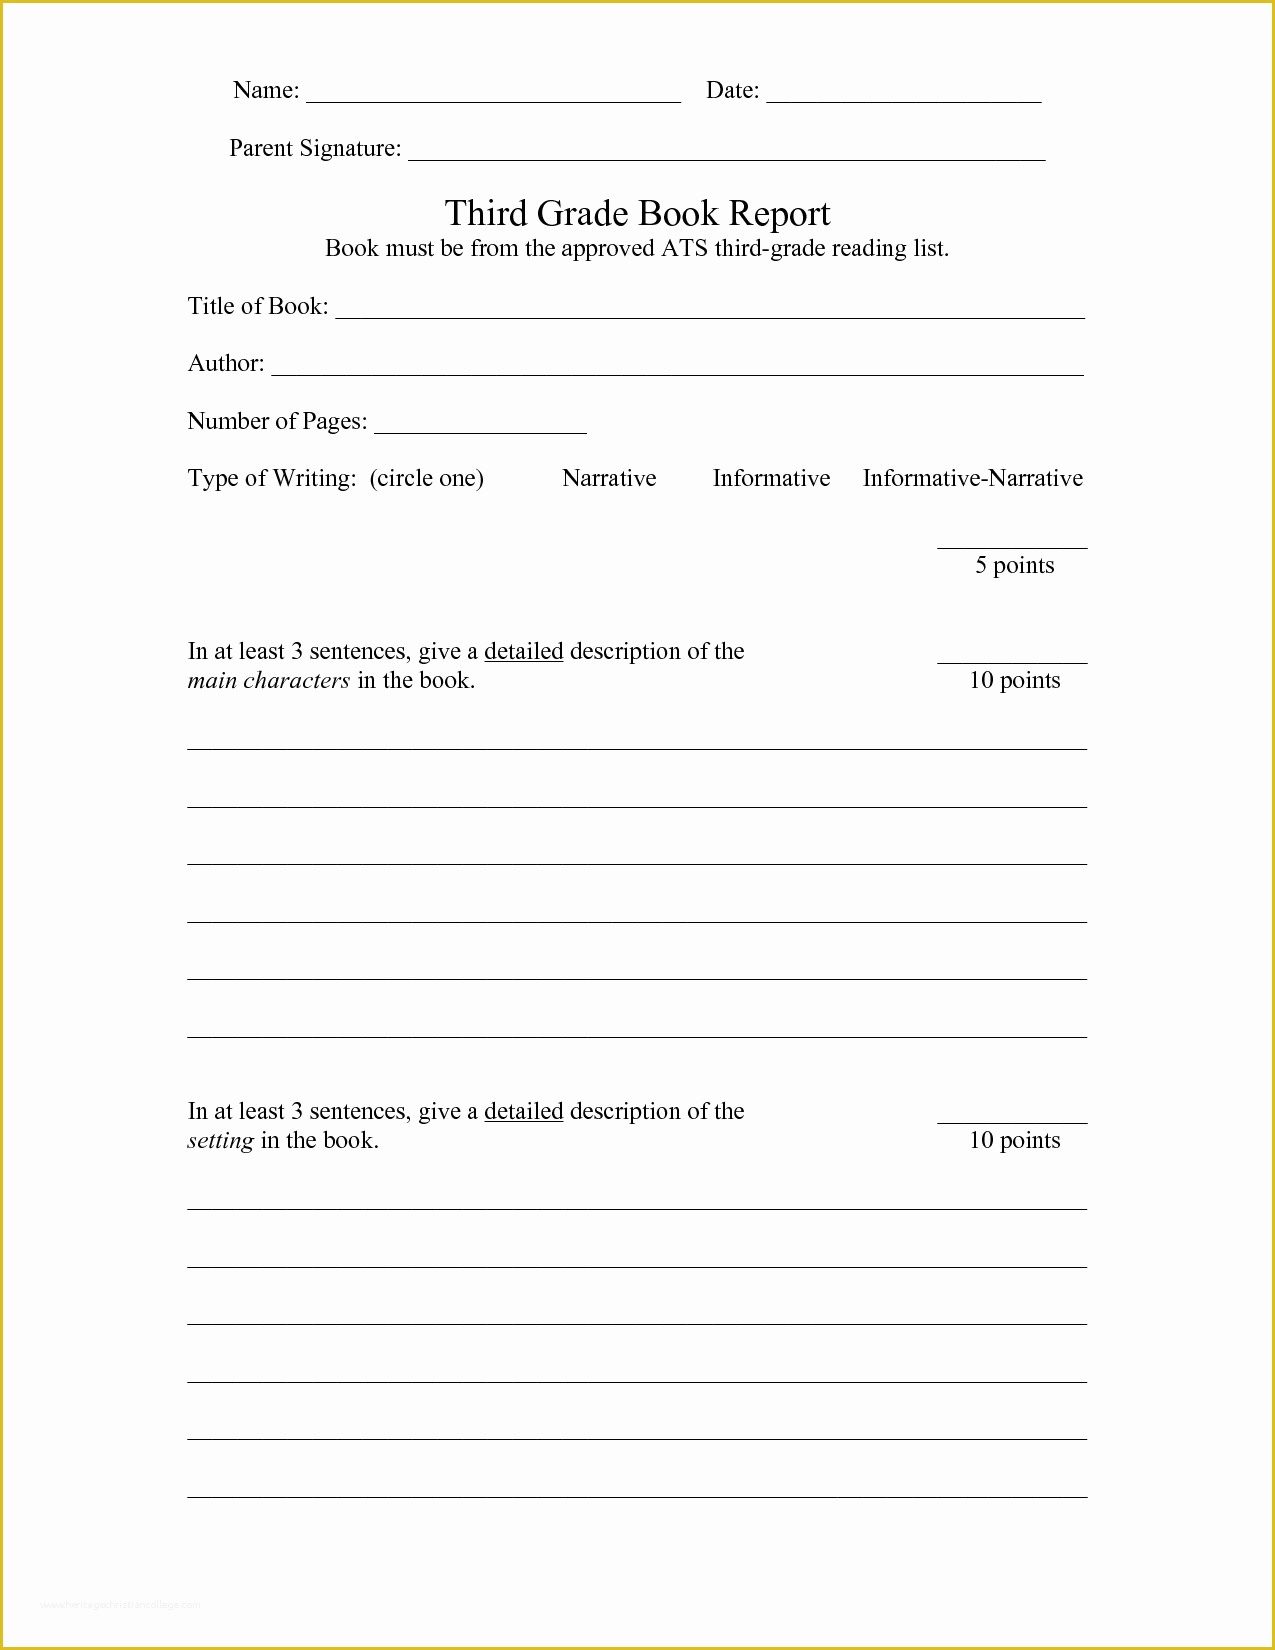 3rd Grade Book Report Template Free Of Book Report Template 4th Grade